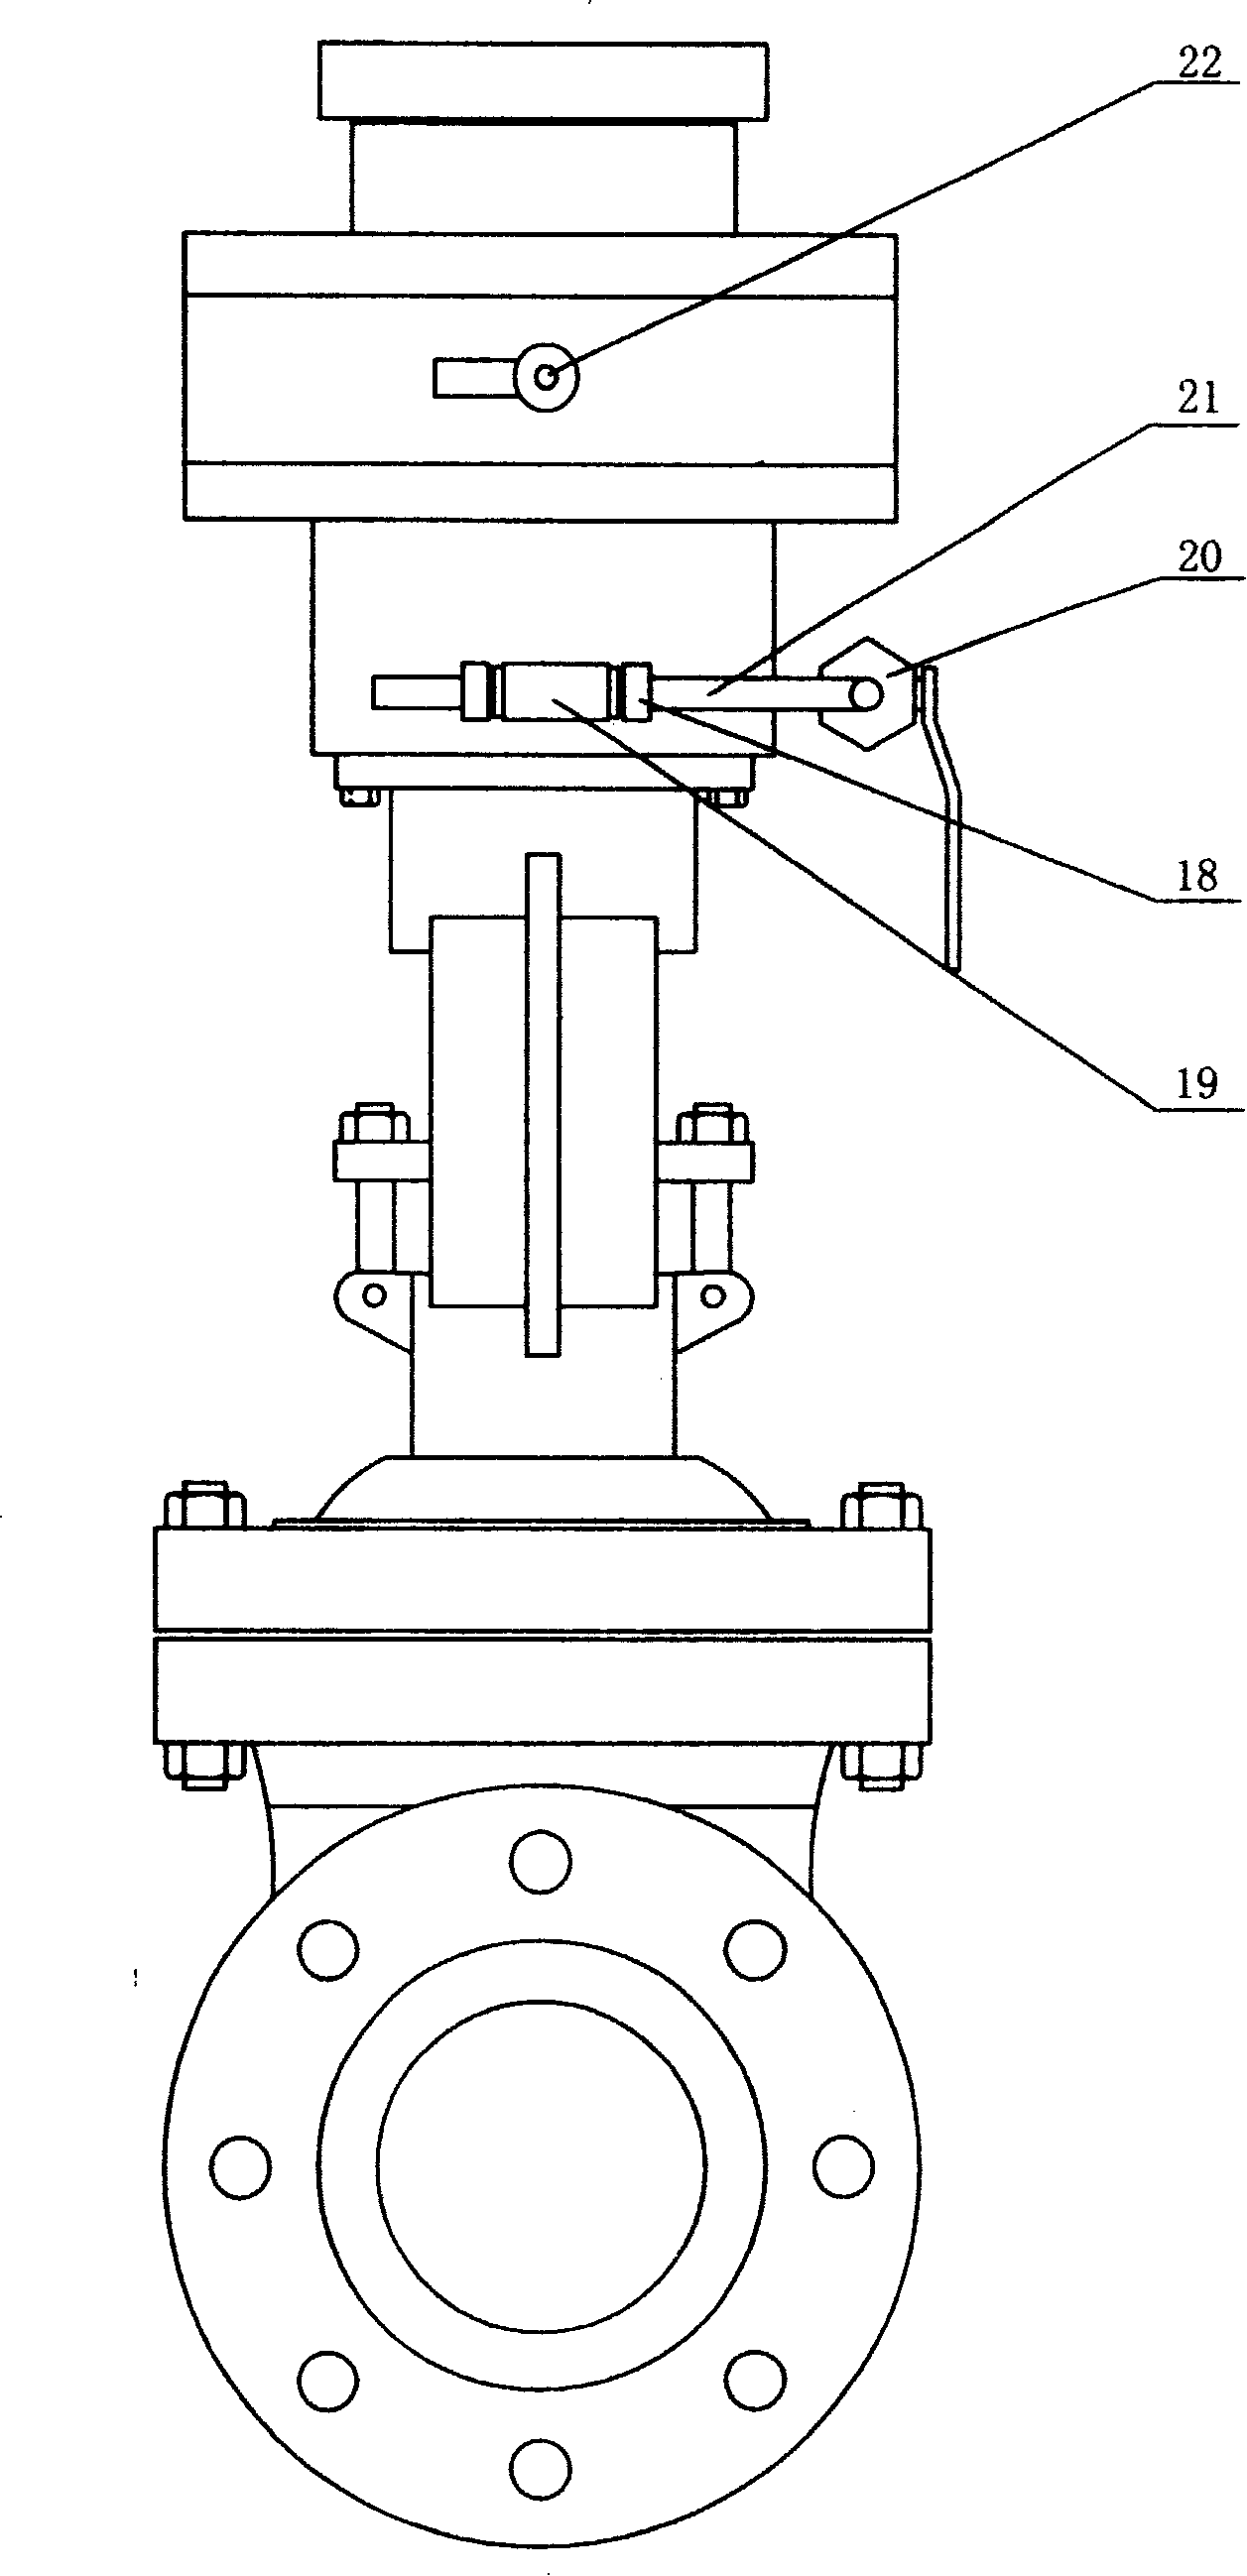 Gyration type hydraulic operated valve